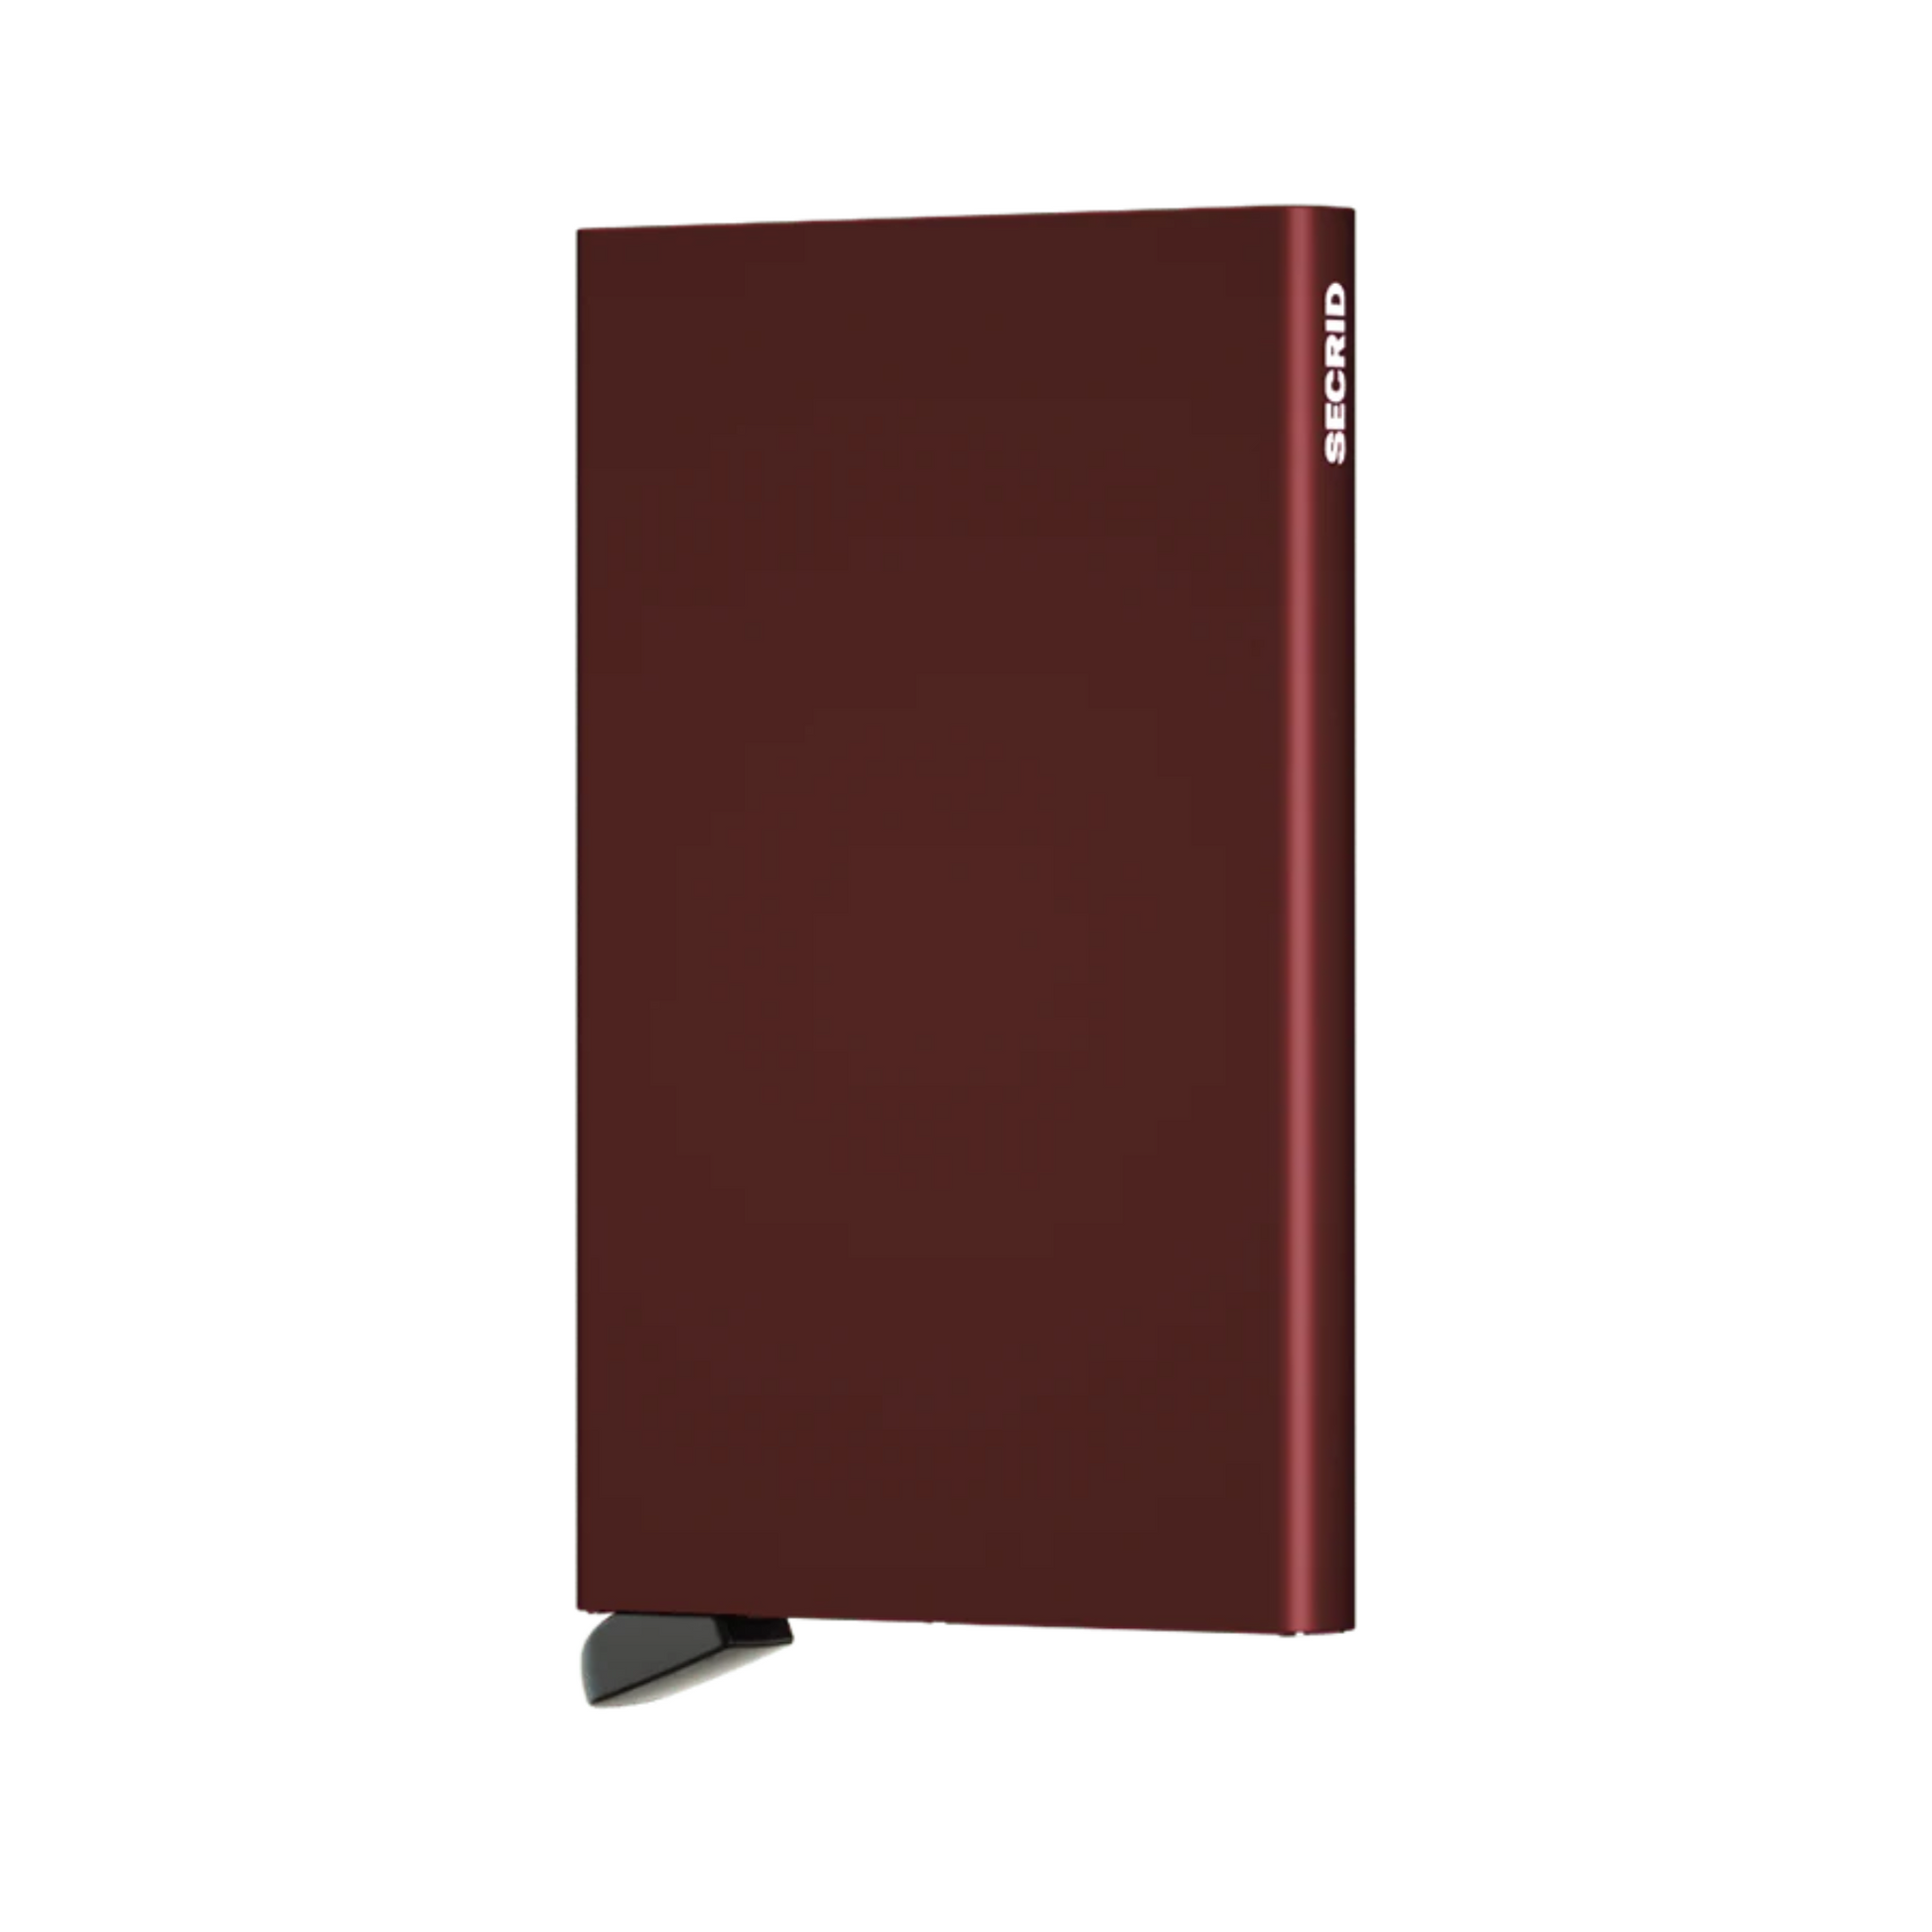 Metallic burgundy rectangular wallet with black bottom tab and small white logo on side.